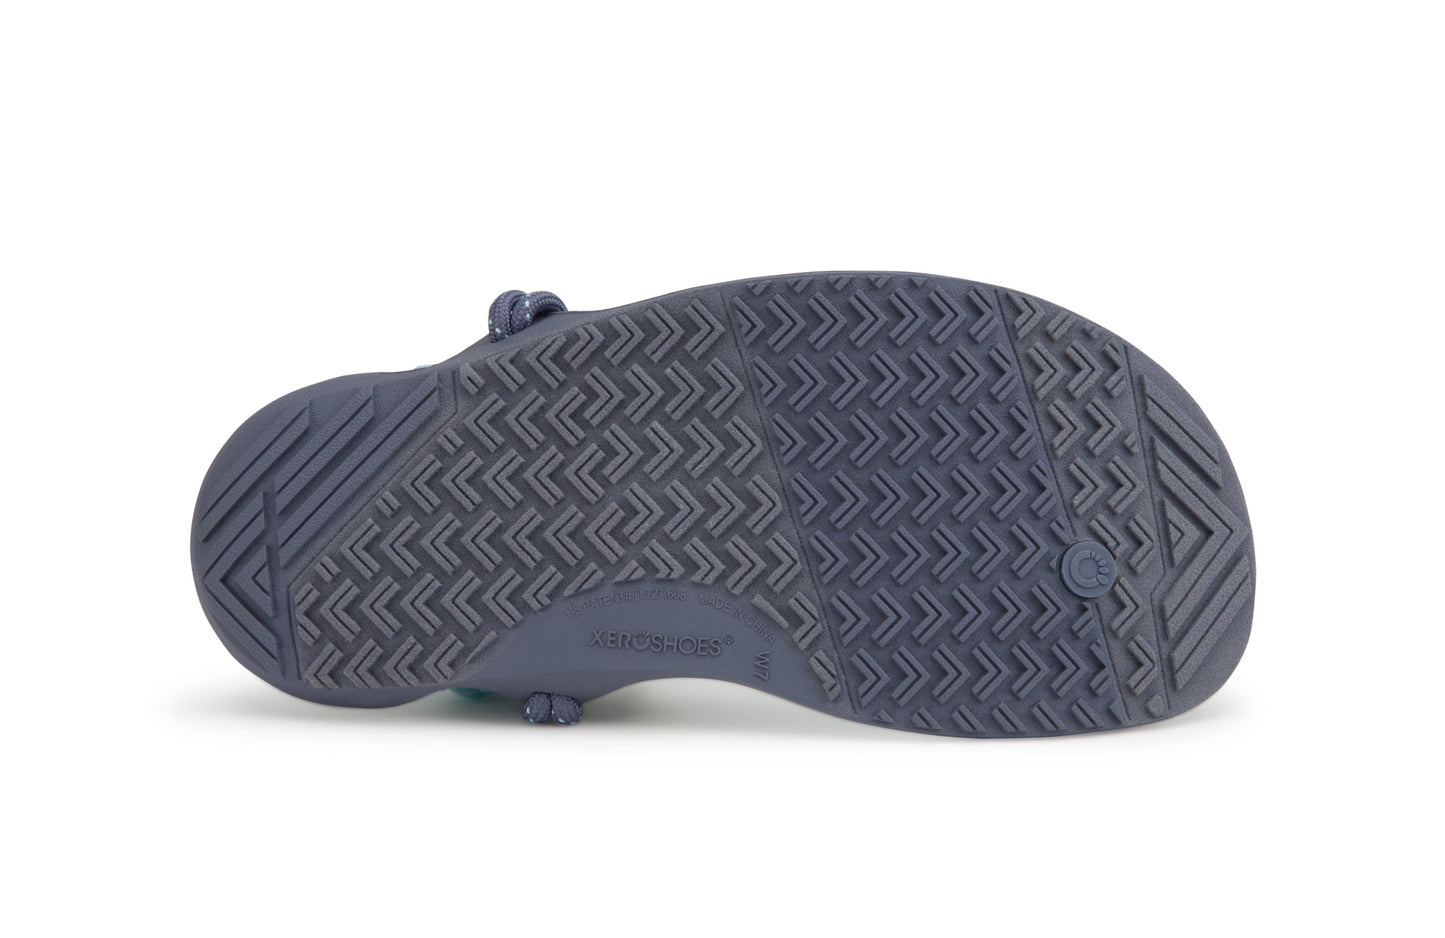 Xero Shoes Aqua Cloud Womens barfods minimalistiske sandaler til kvinder i farven blue glow, saal